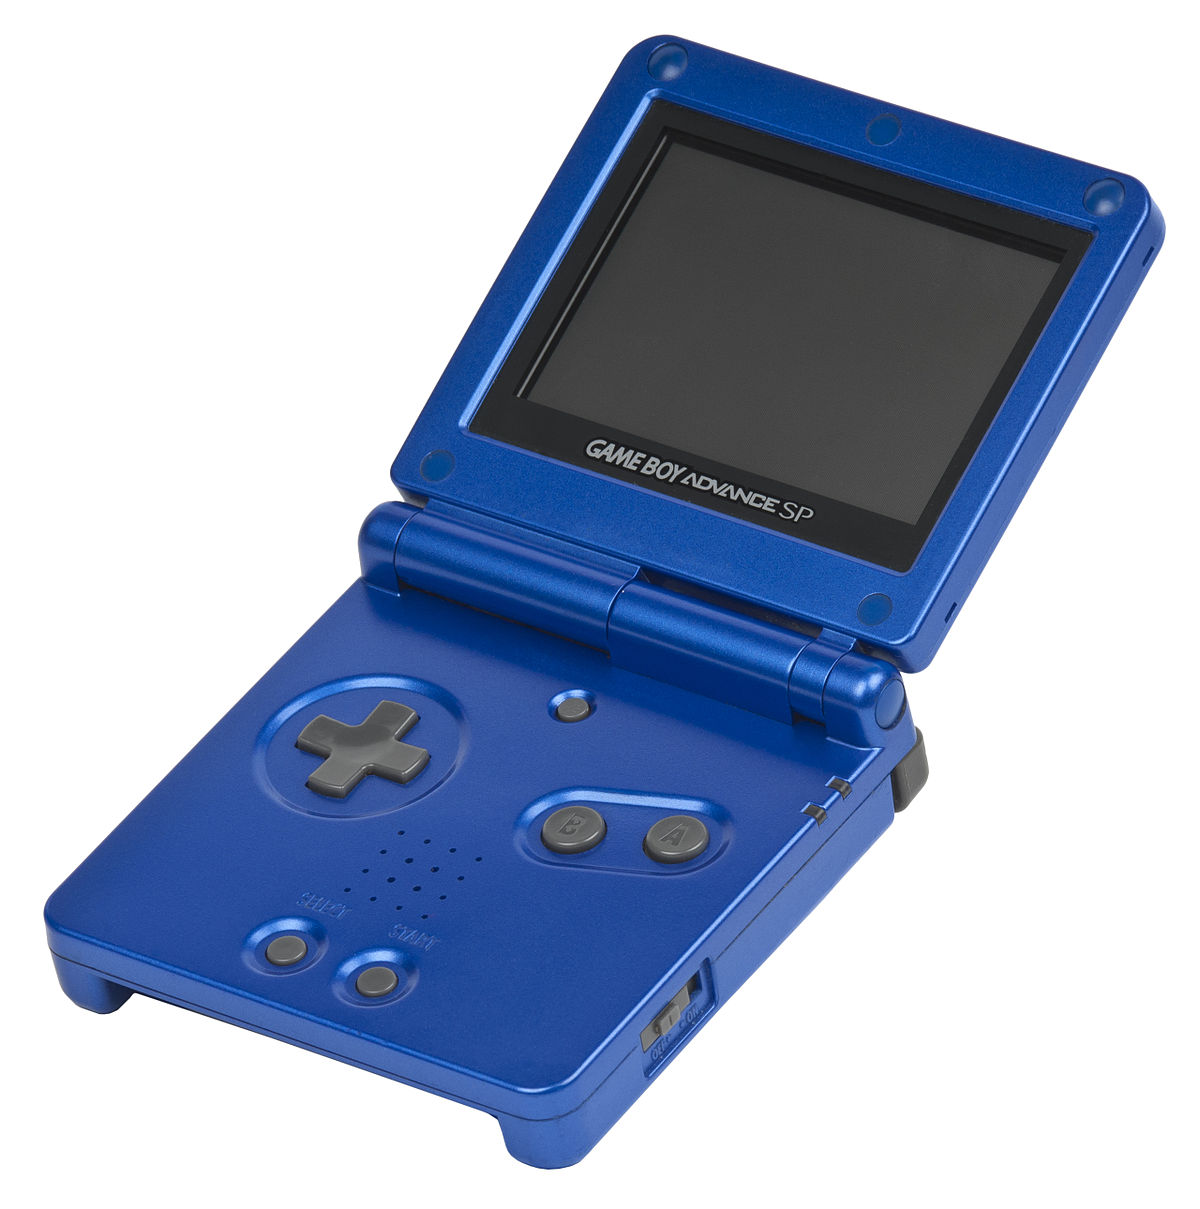 Nintendo Game Boy Advance (GBA) image failed to load